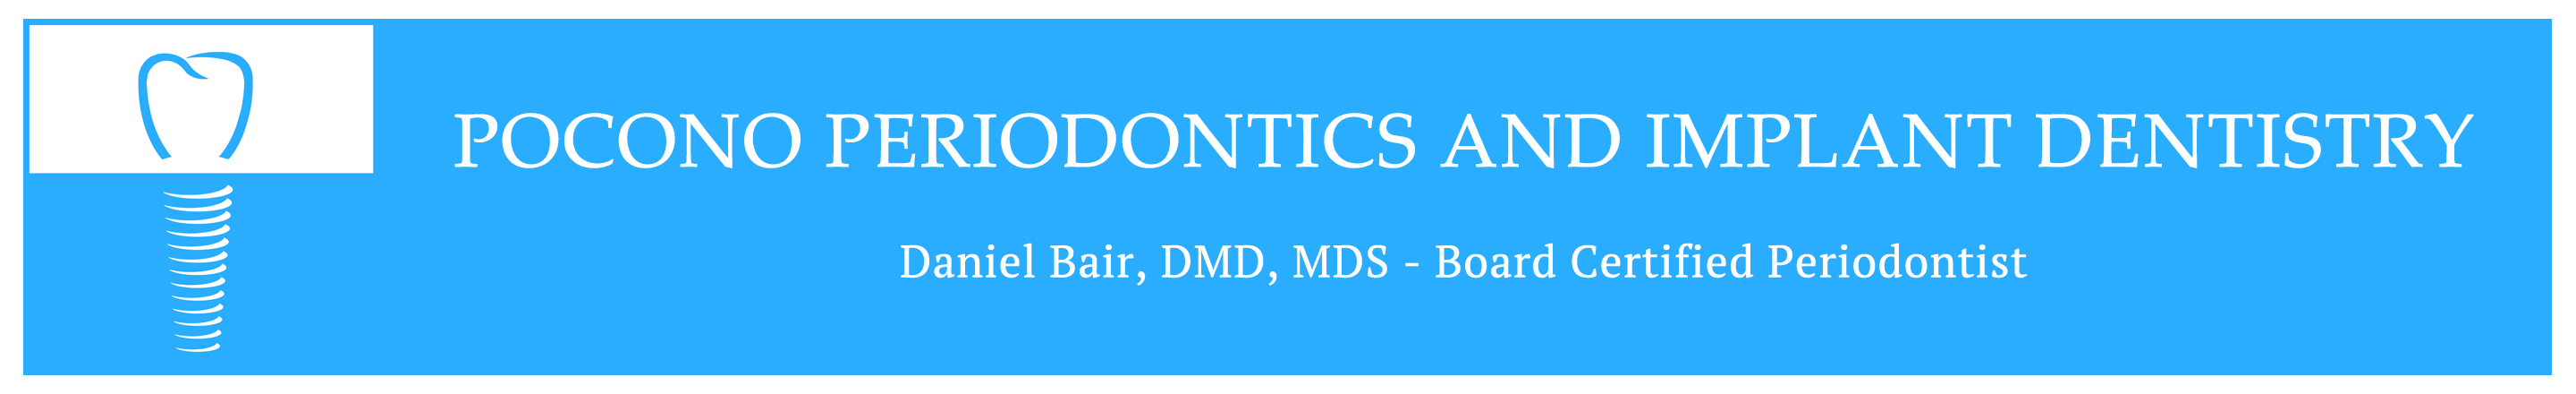 Pocono Periodontics and Implant Dentistry